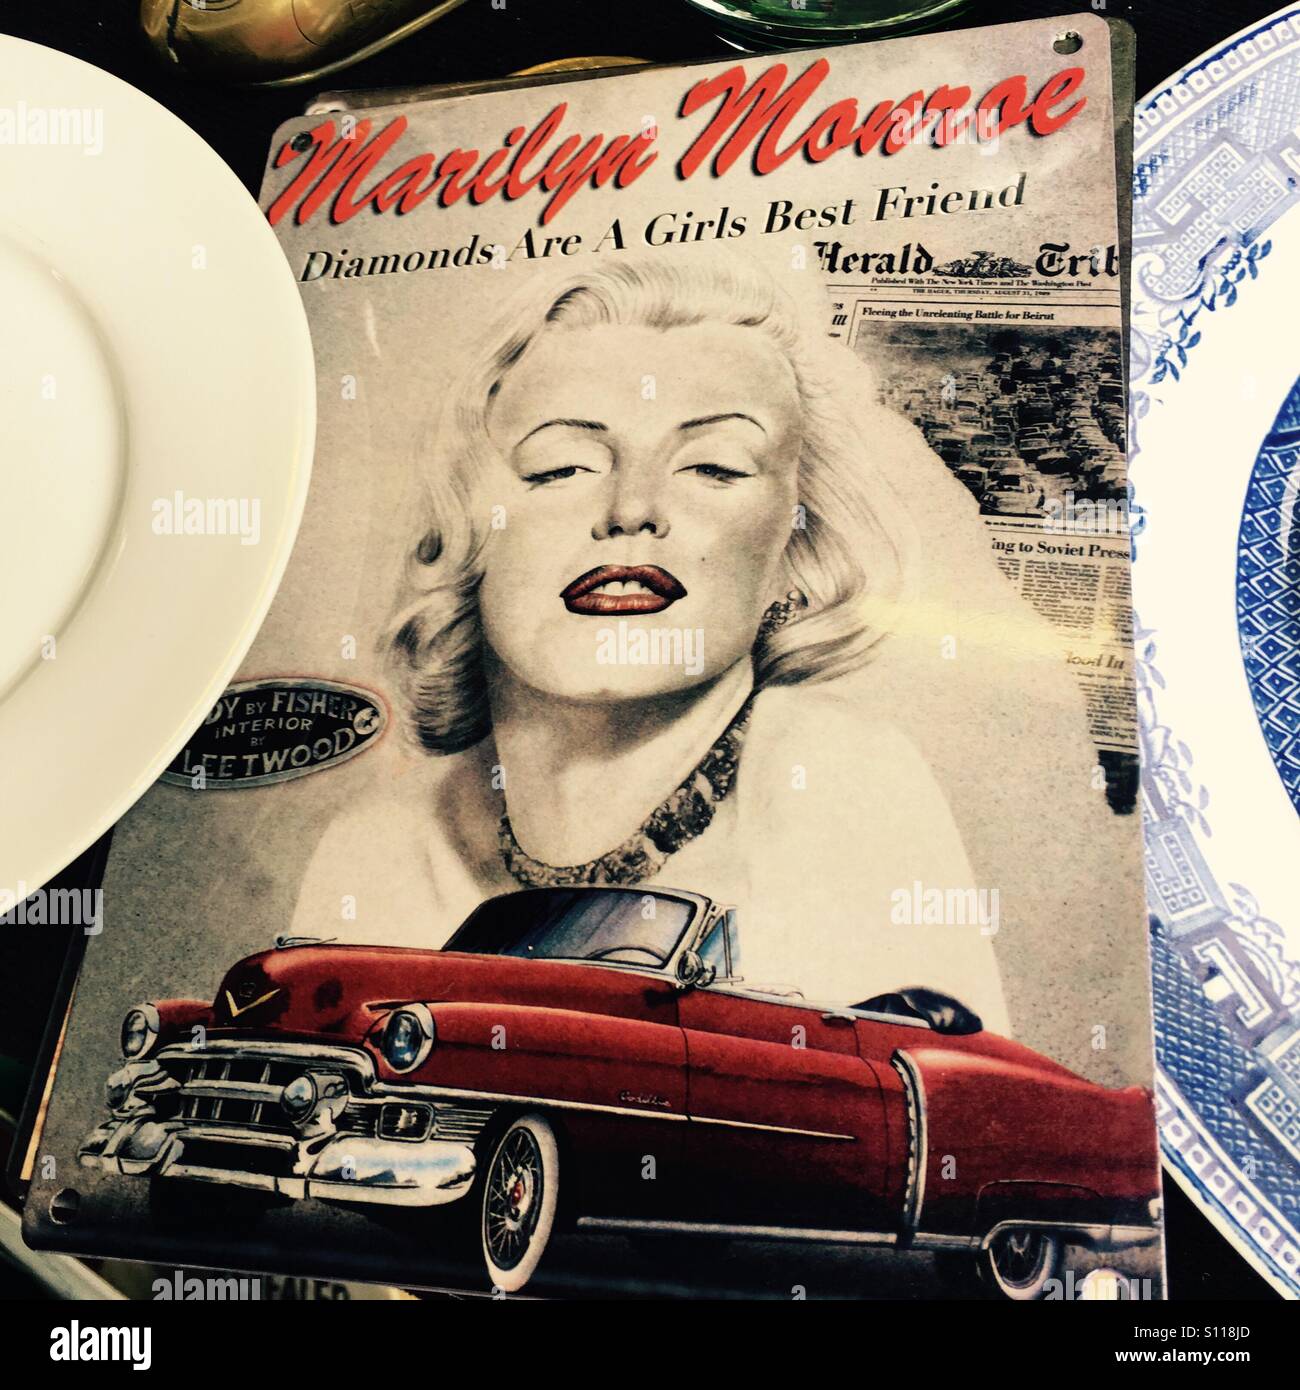 Marilyn Monroe memorabilia at a flea market Stock Photo